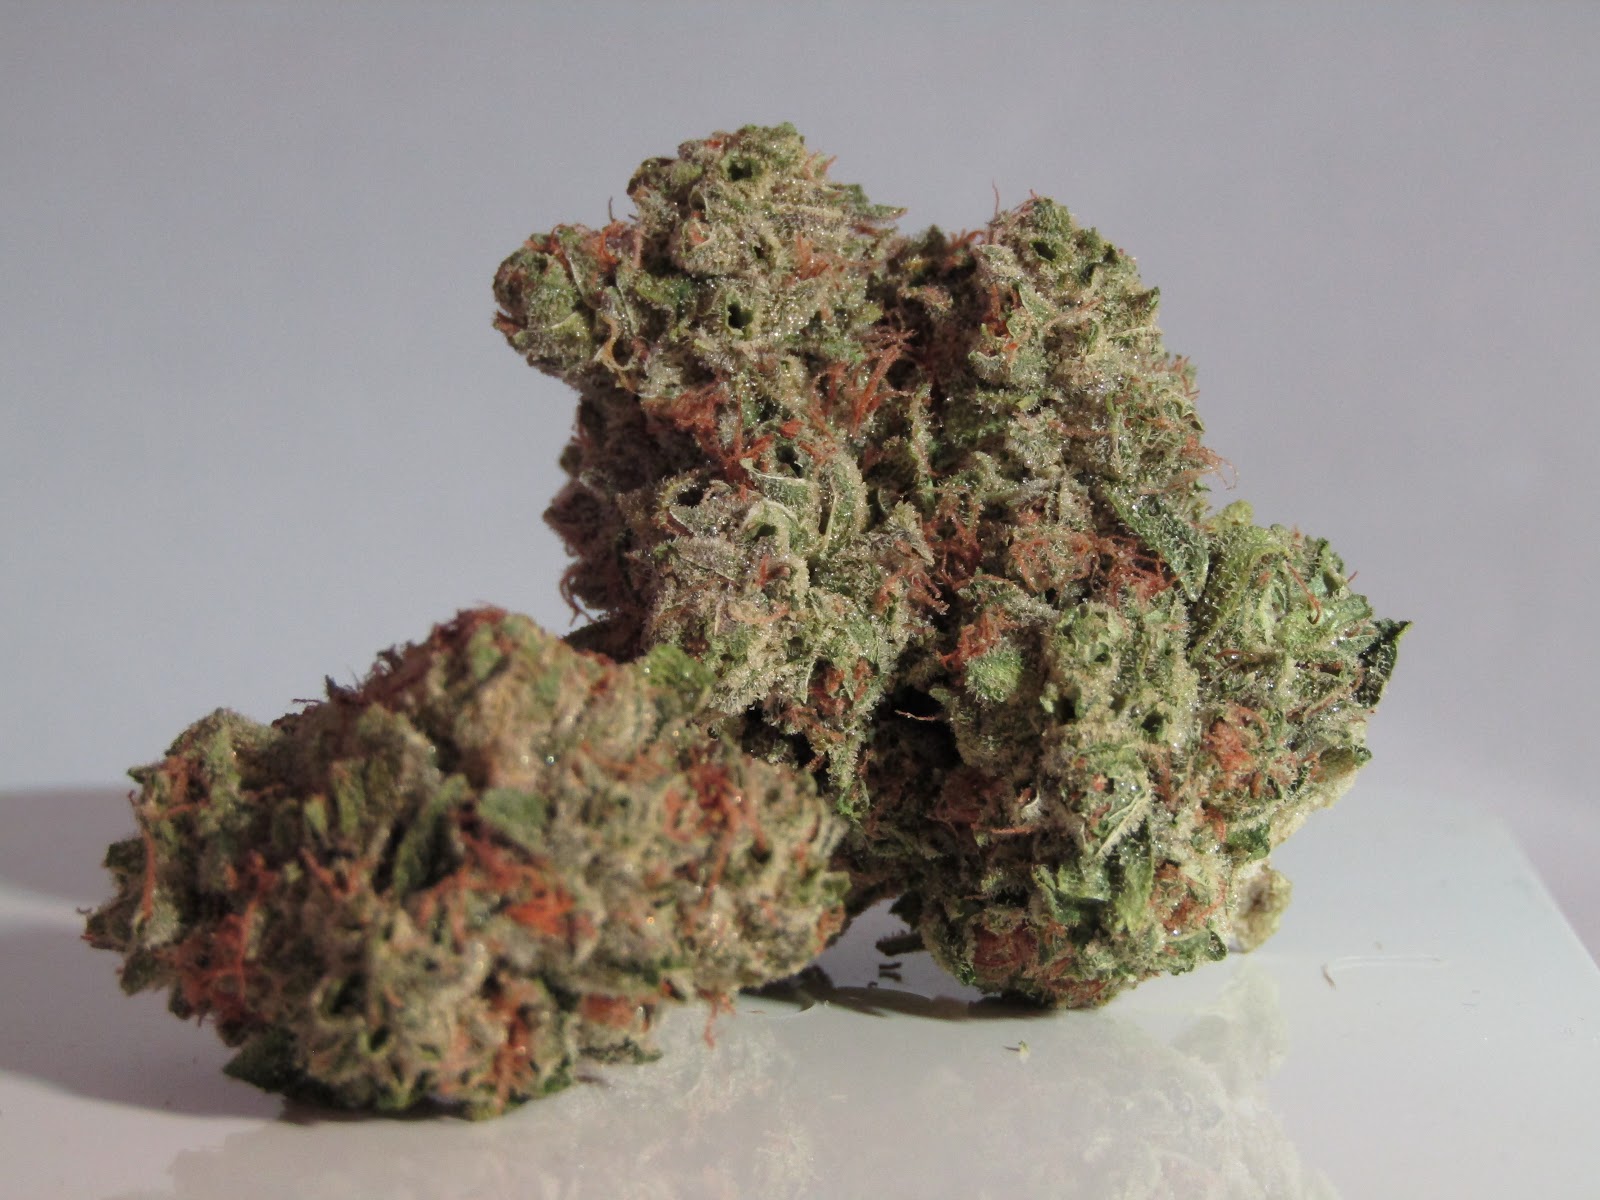 A decent sized nug of marijuana flower for the everyday cannabis enthusiast